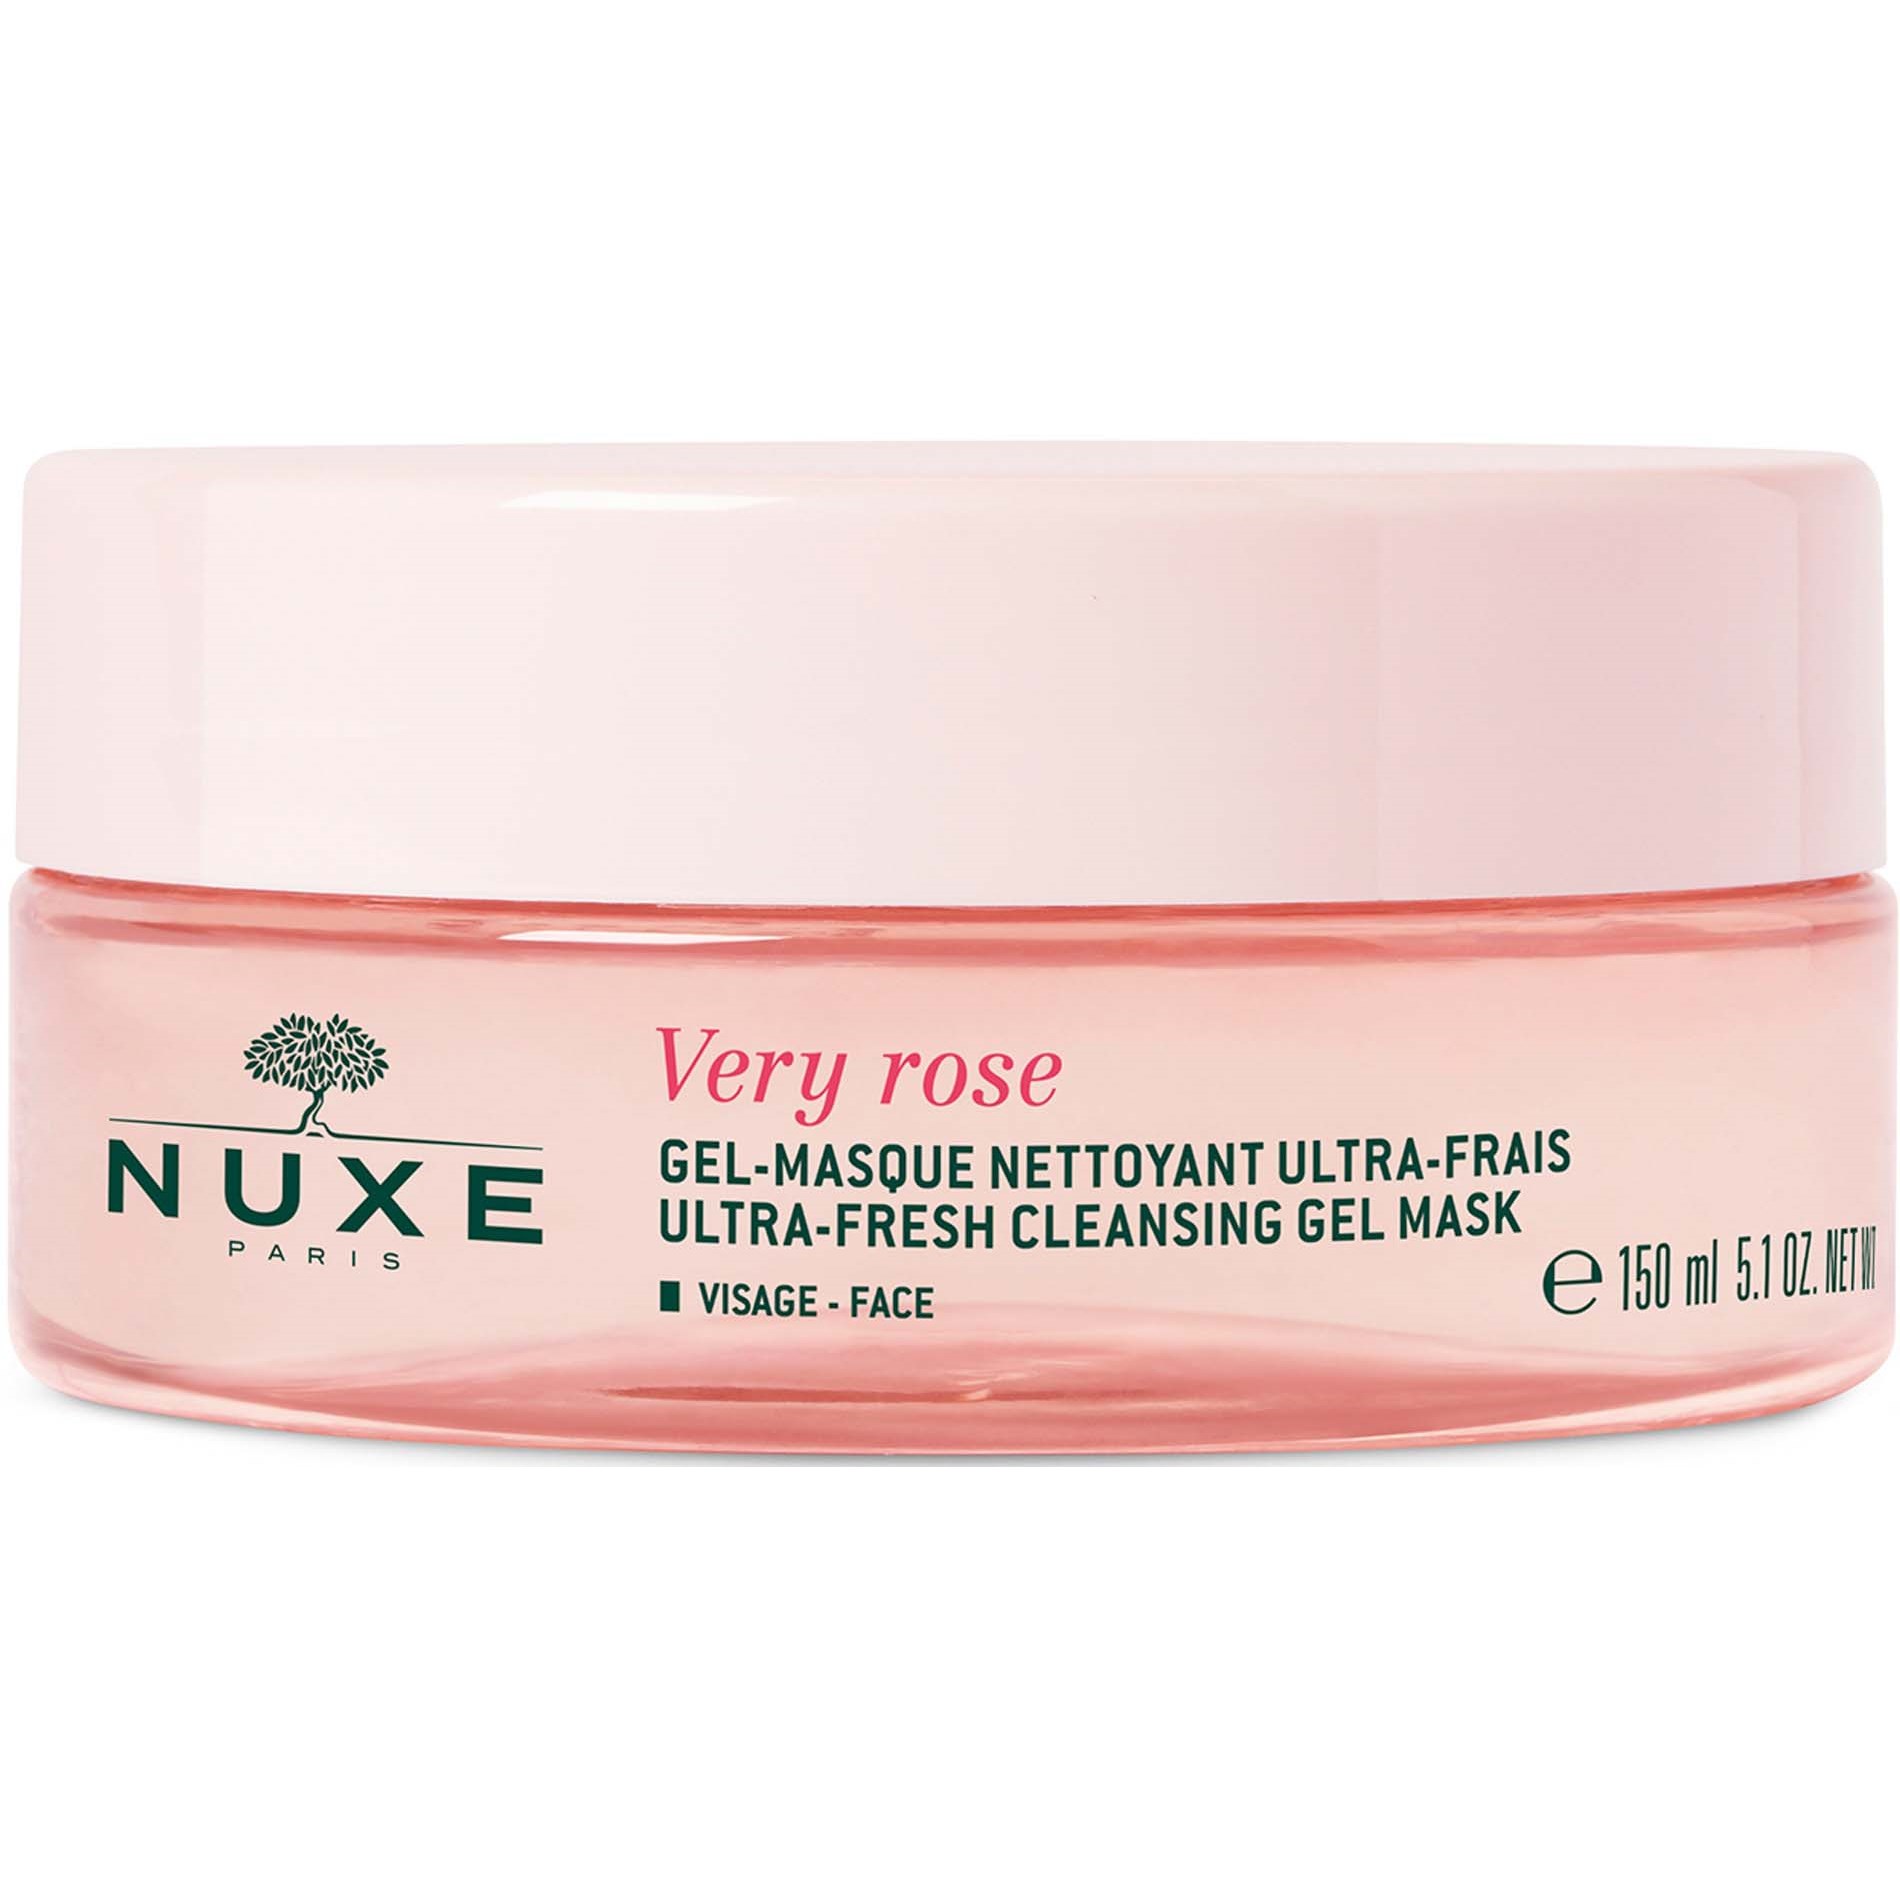 Фото - Засіб для очищення обличчя і тіла Nuxe Very rose Ultra-Fresh Cleansing Gel Mask 150 ml 